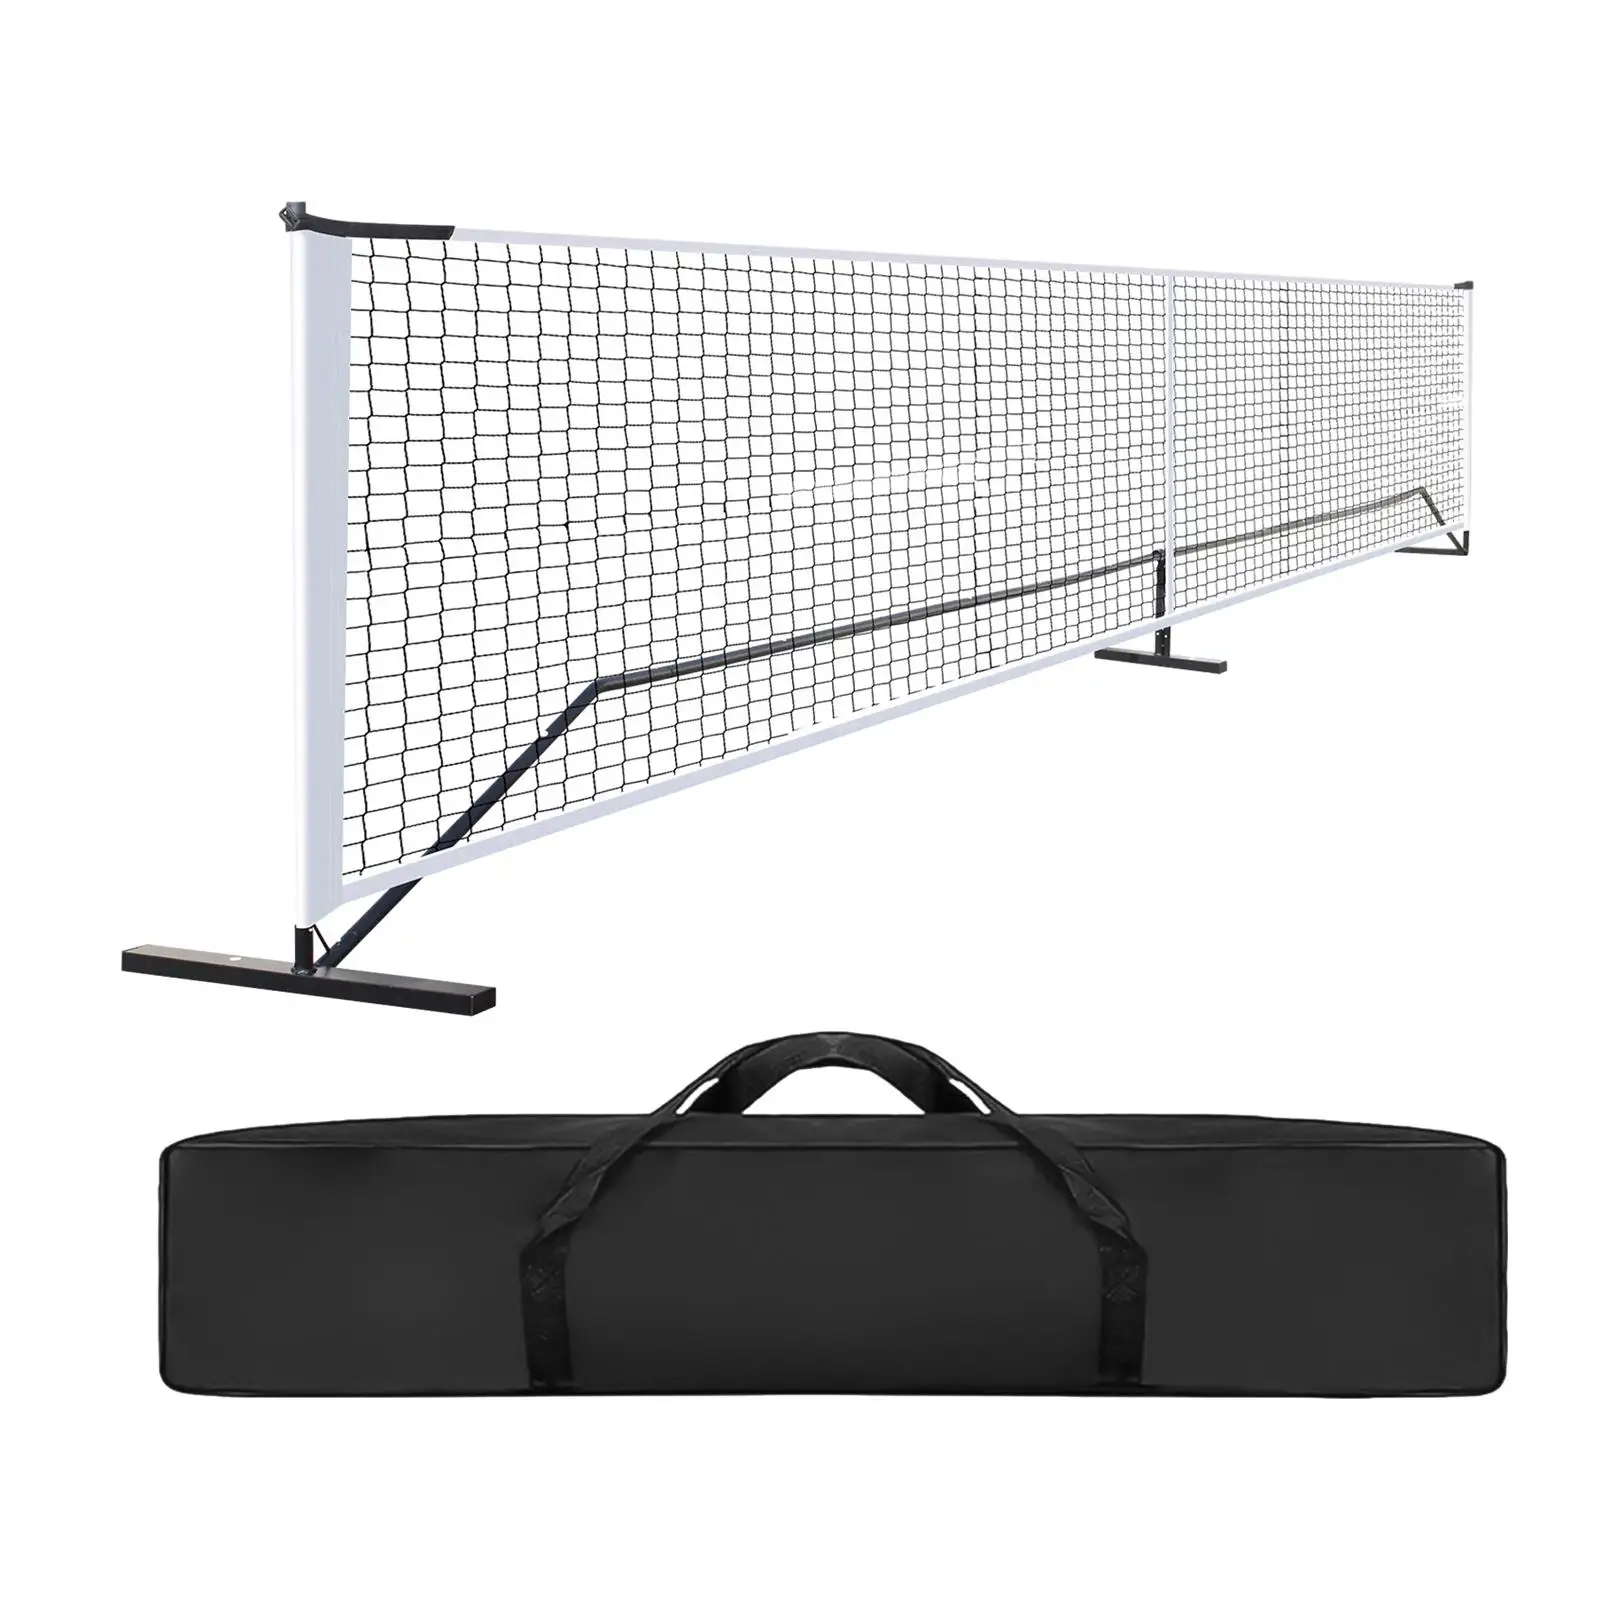 Portable Pickleball Net System Lightweight 22 Feet Professional Easy Setup Tennis Net for Lawn Exercise Tennis Backyard Court